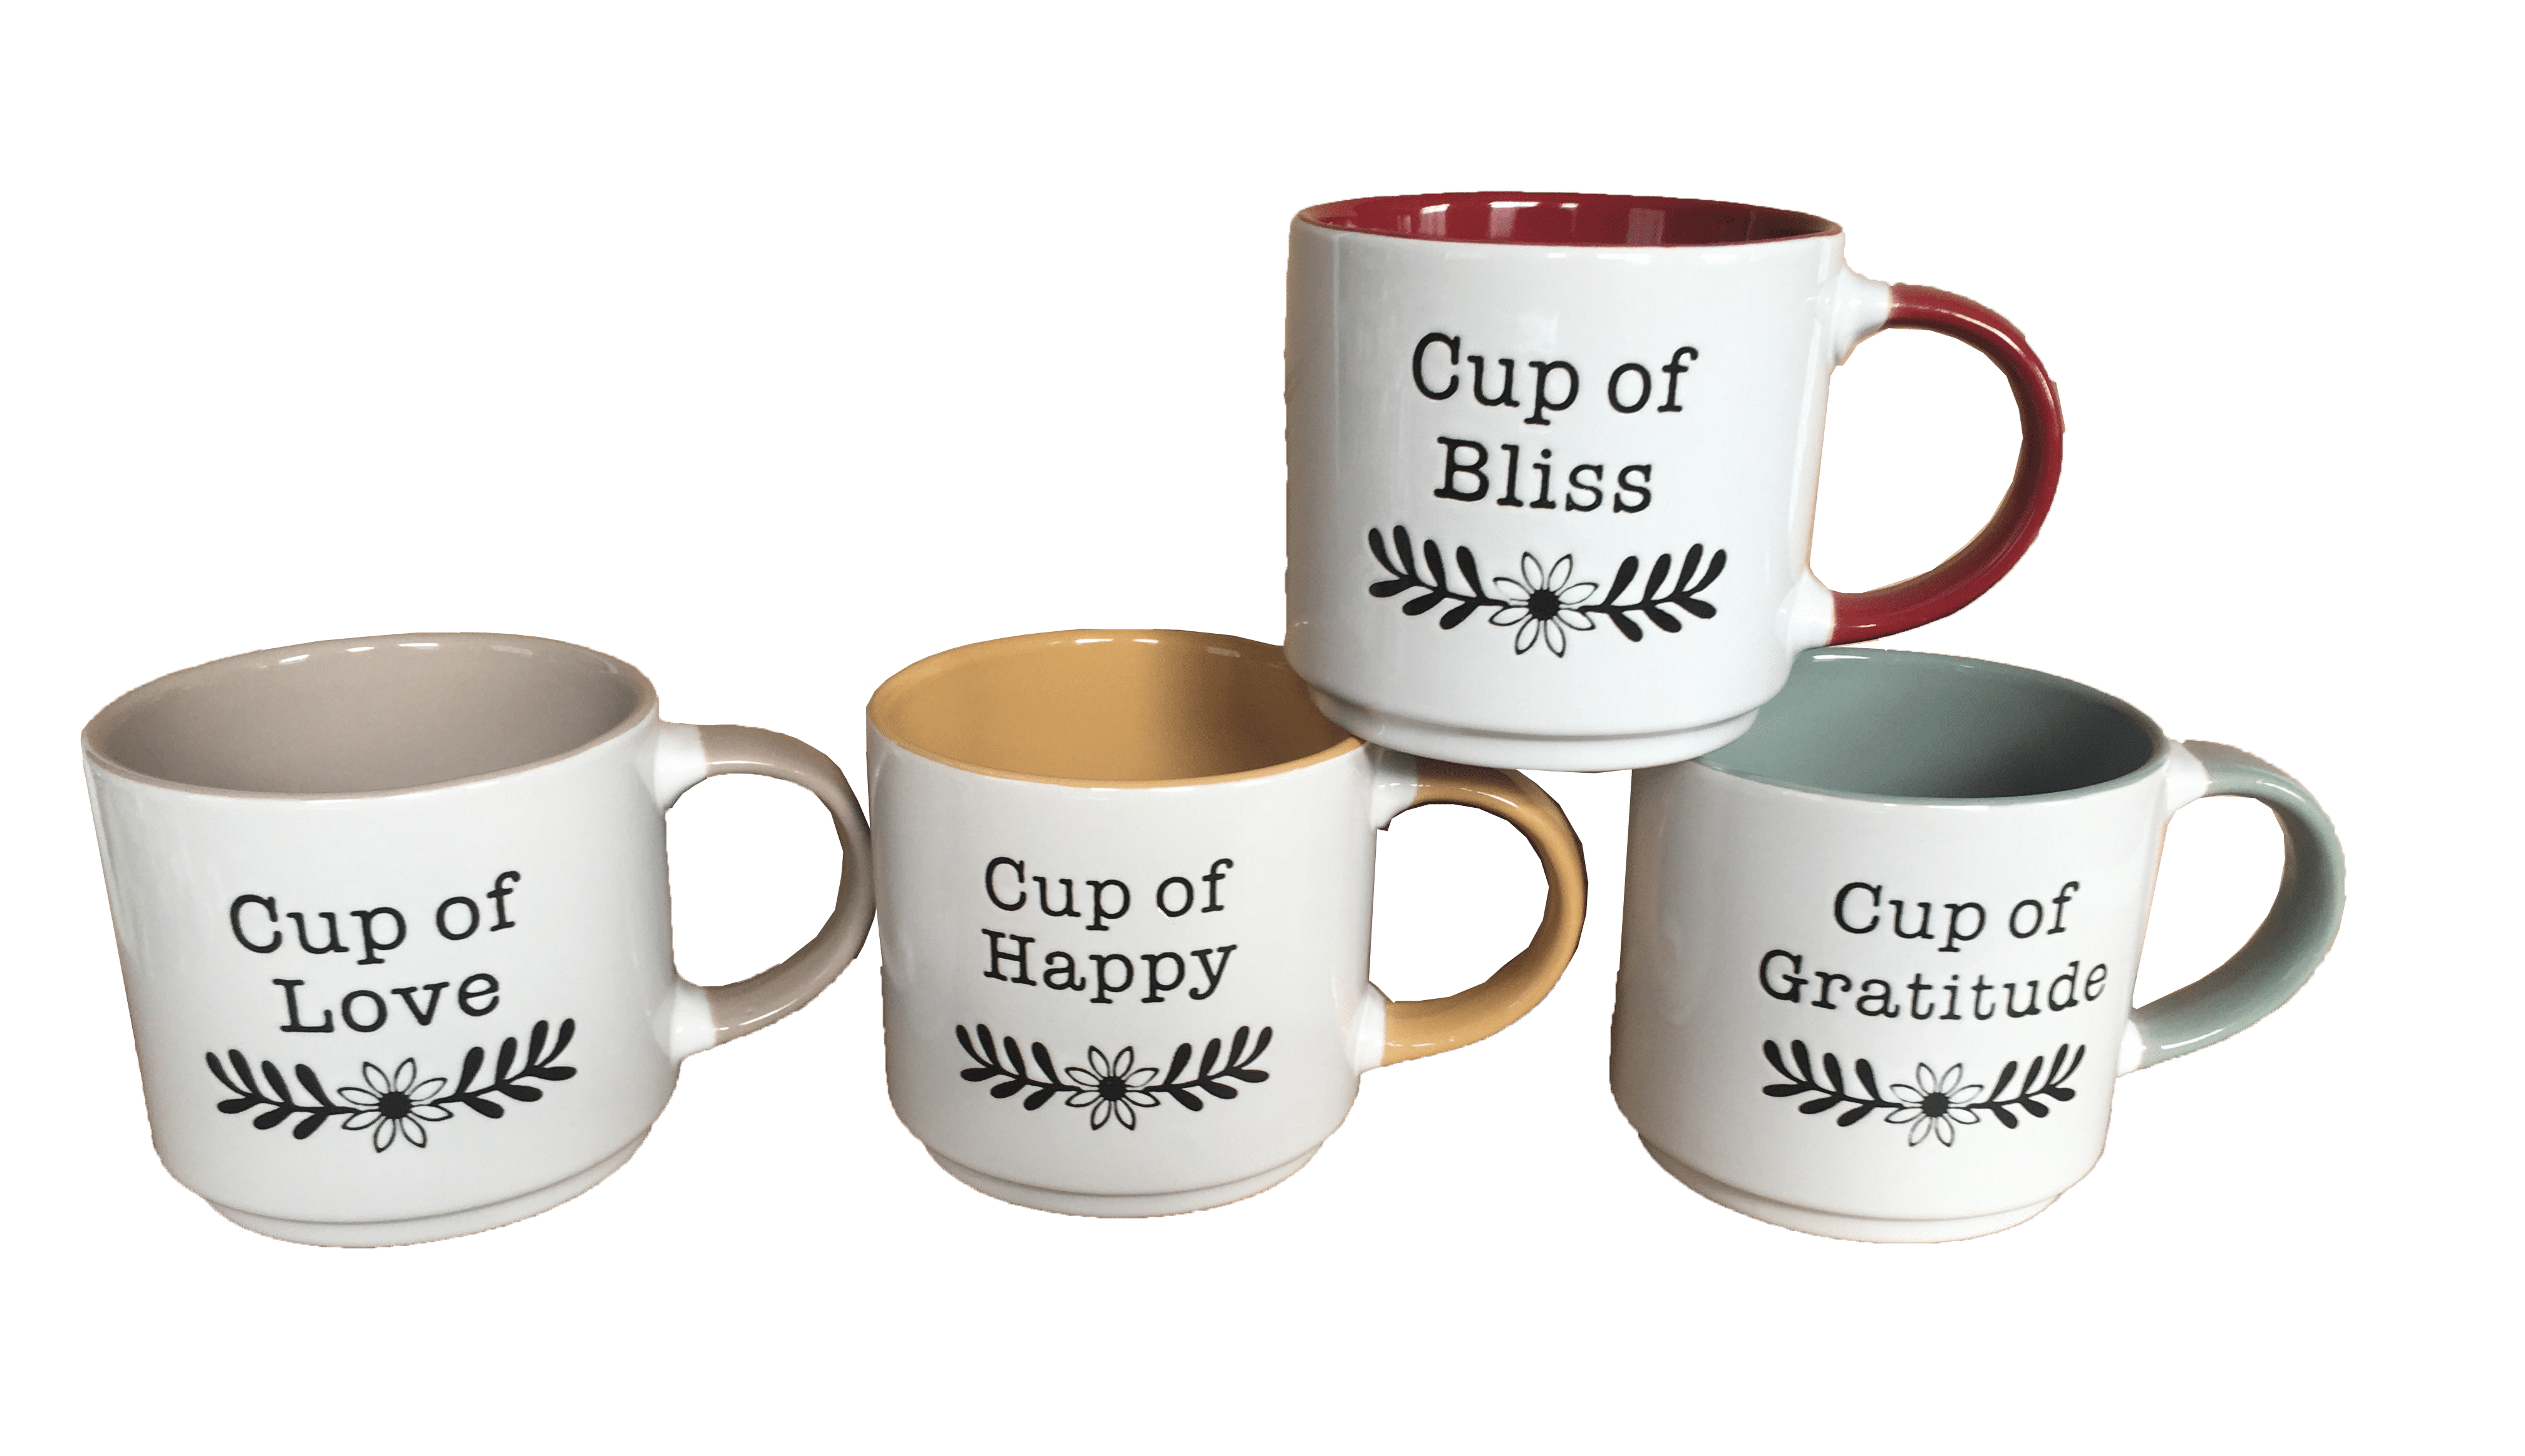 Picknick Coffee Mugs 20 cl 4-pack, Clear - Sagaform @ RoyalDesign